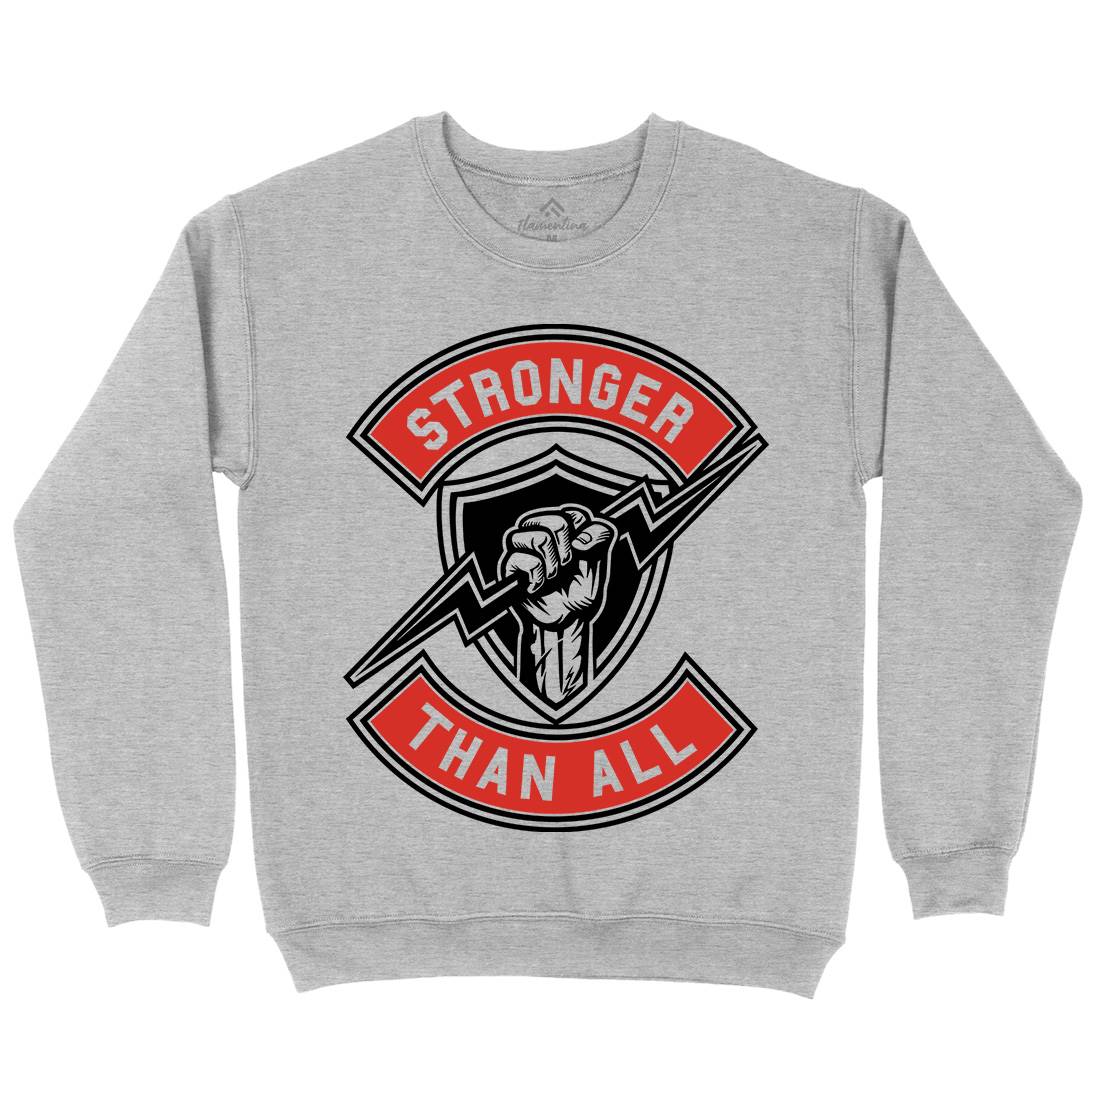 Stronger Than All Kids Crew Neck Sweatshirt Gym A290